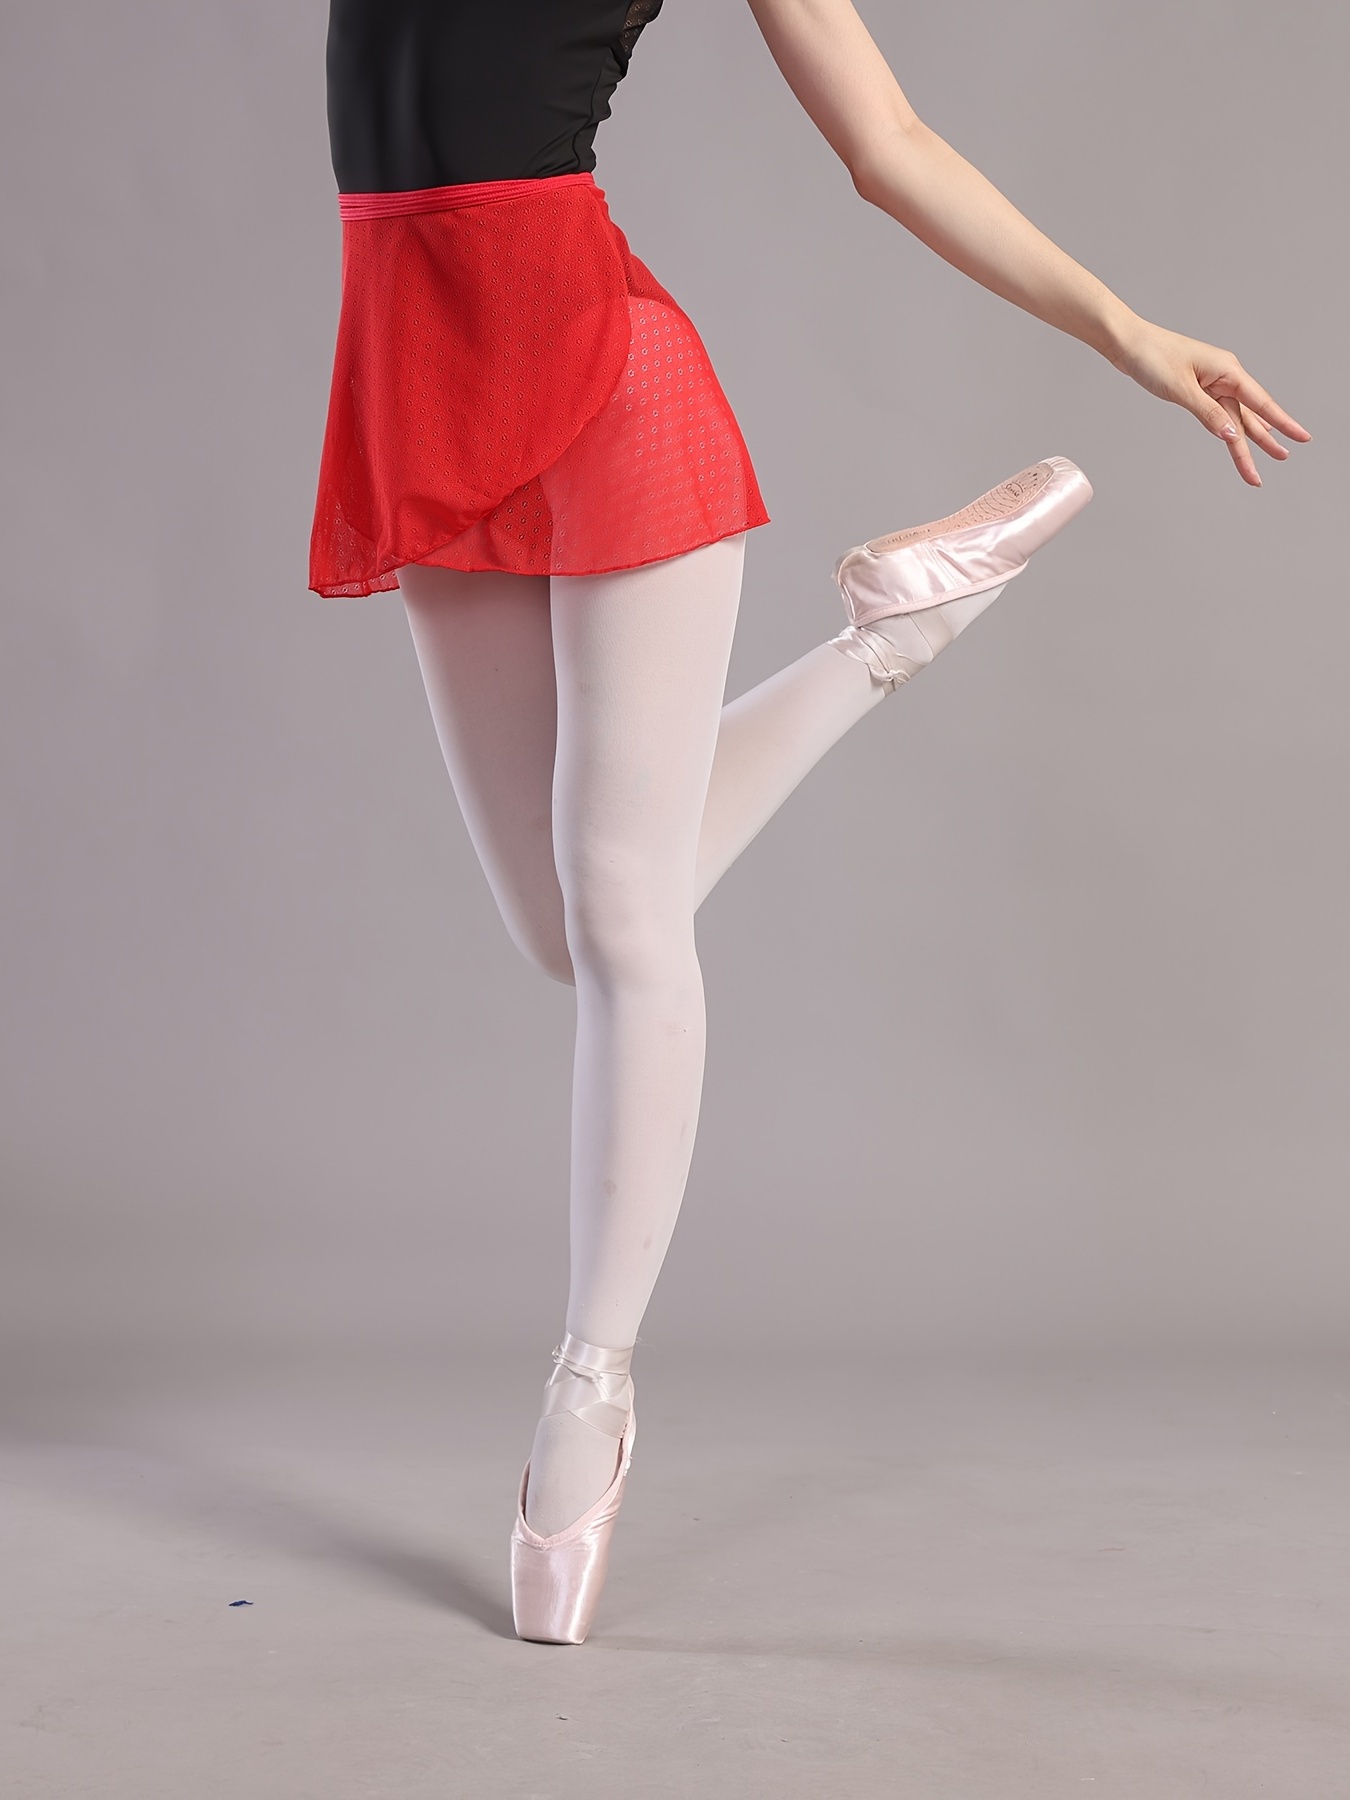 Falda Cruzada Negra Red Transparente, Ropa Danza Ballet